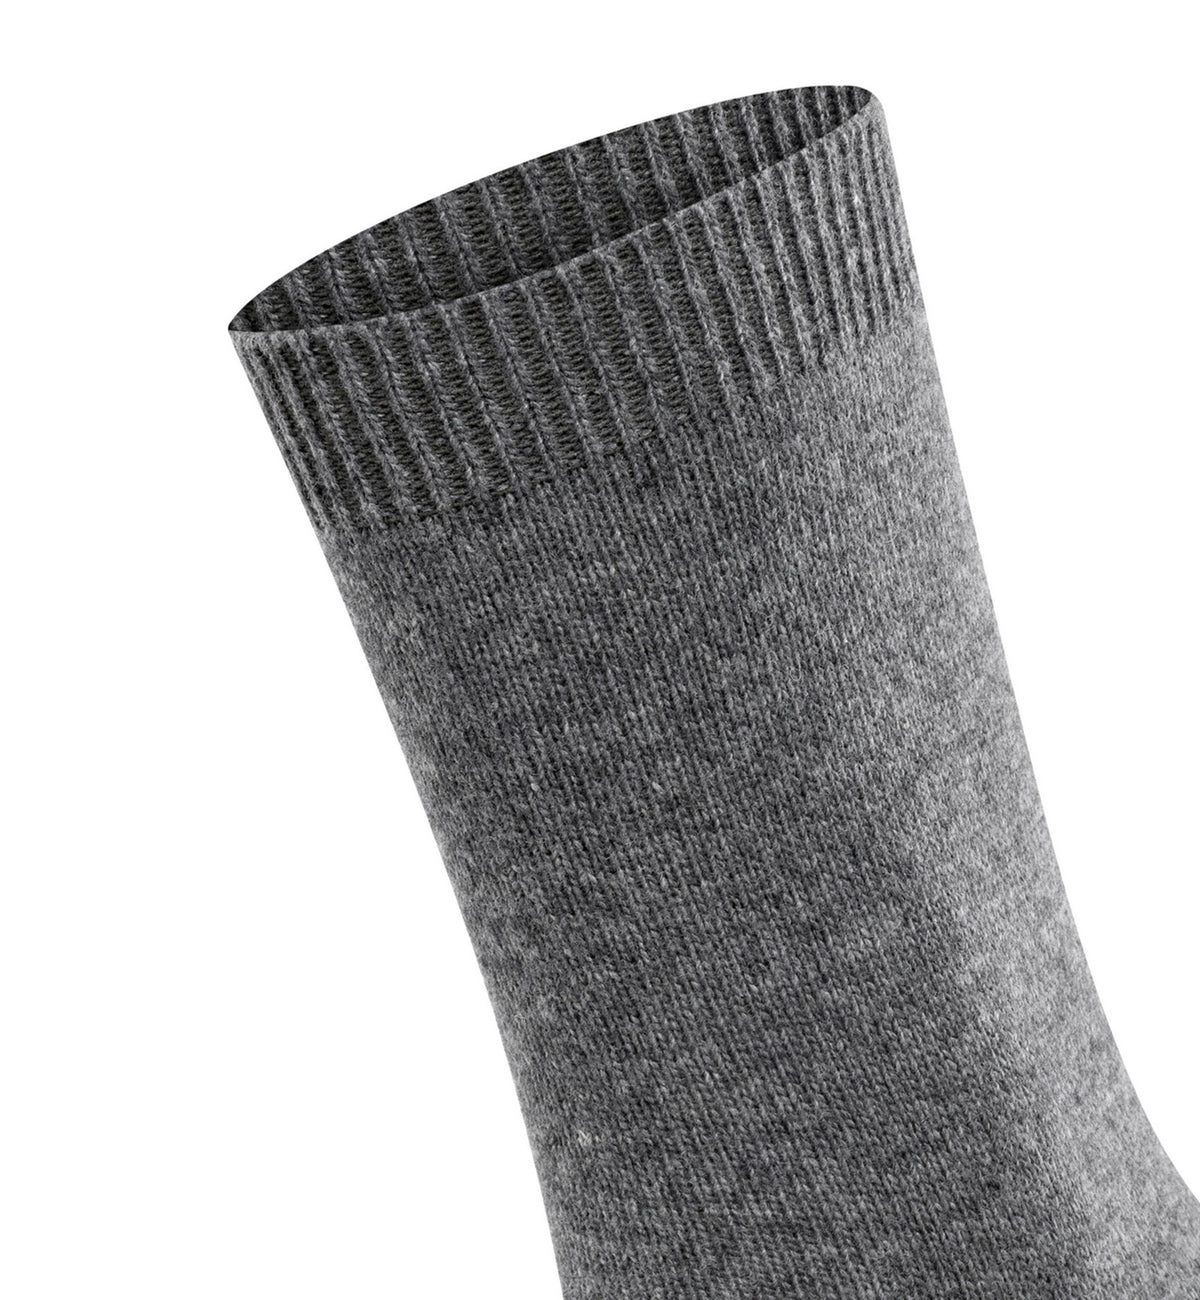 FALKE Cosy Wool Crew Socks (47548),5/7.5,Grey Mix - Grey Mix,5/7.5